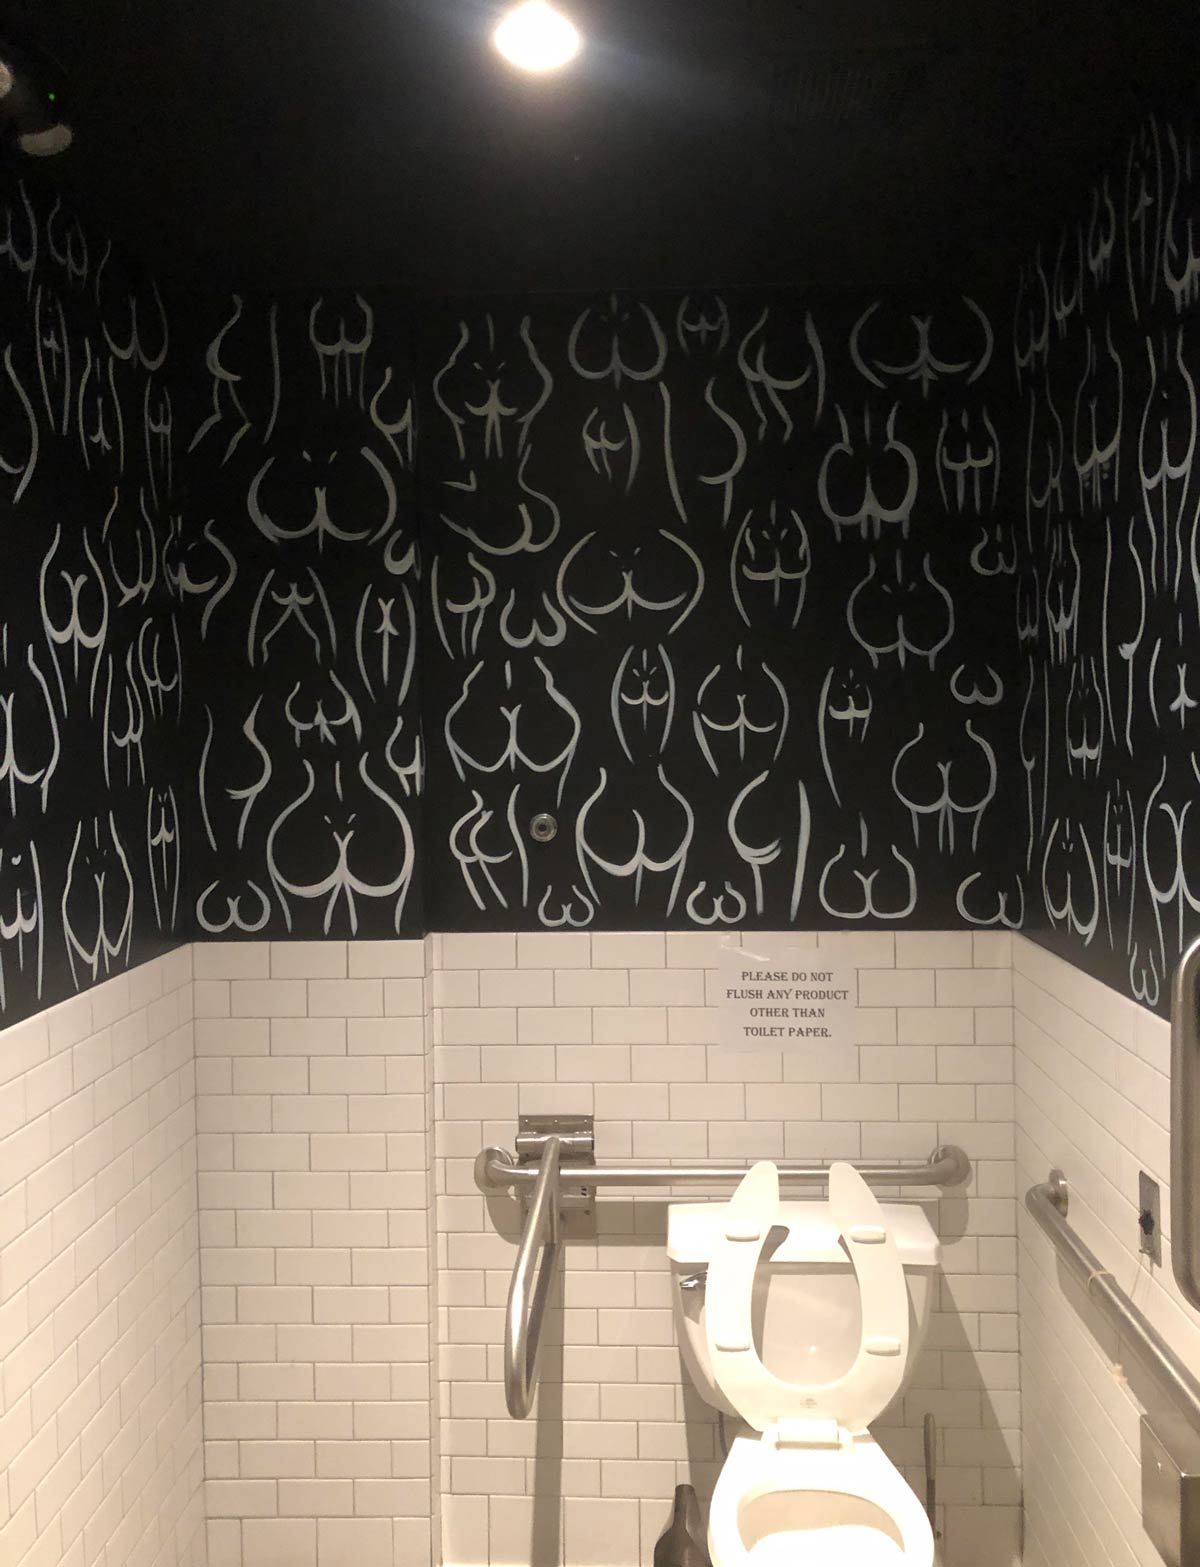 This bathroom has unique wallpaper